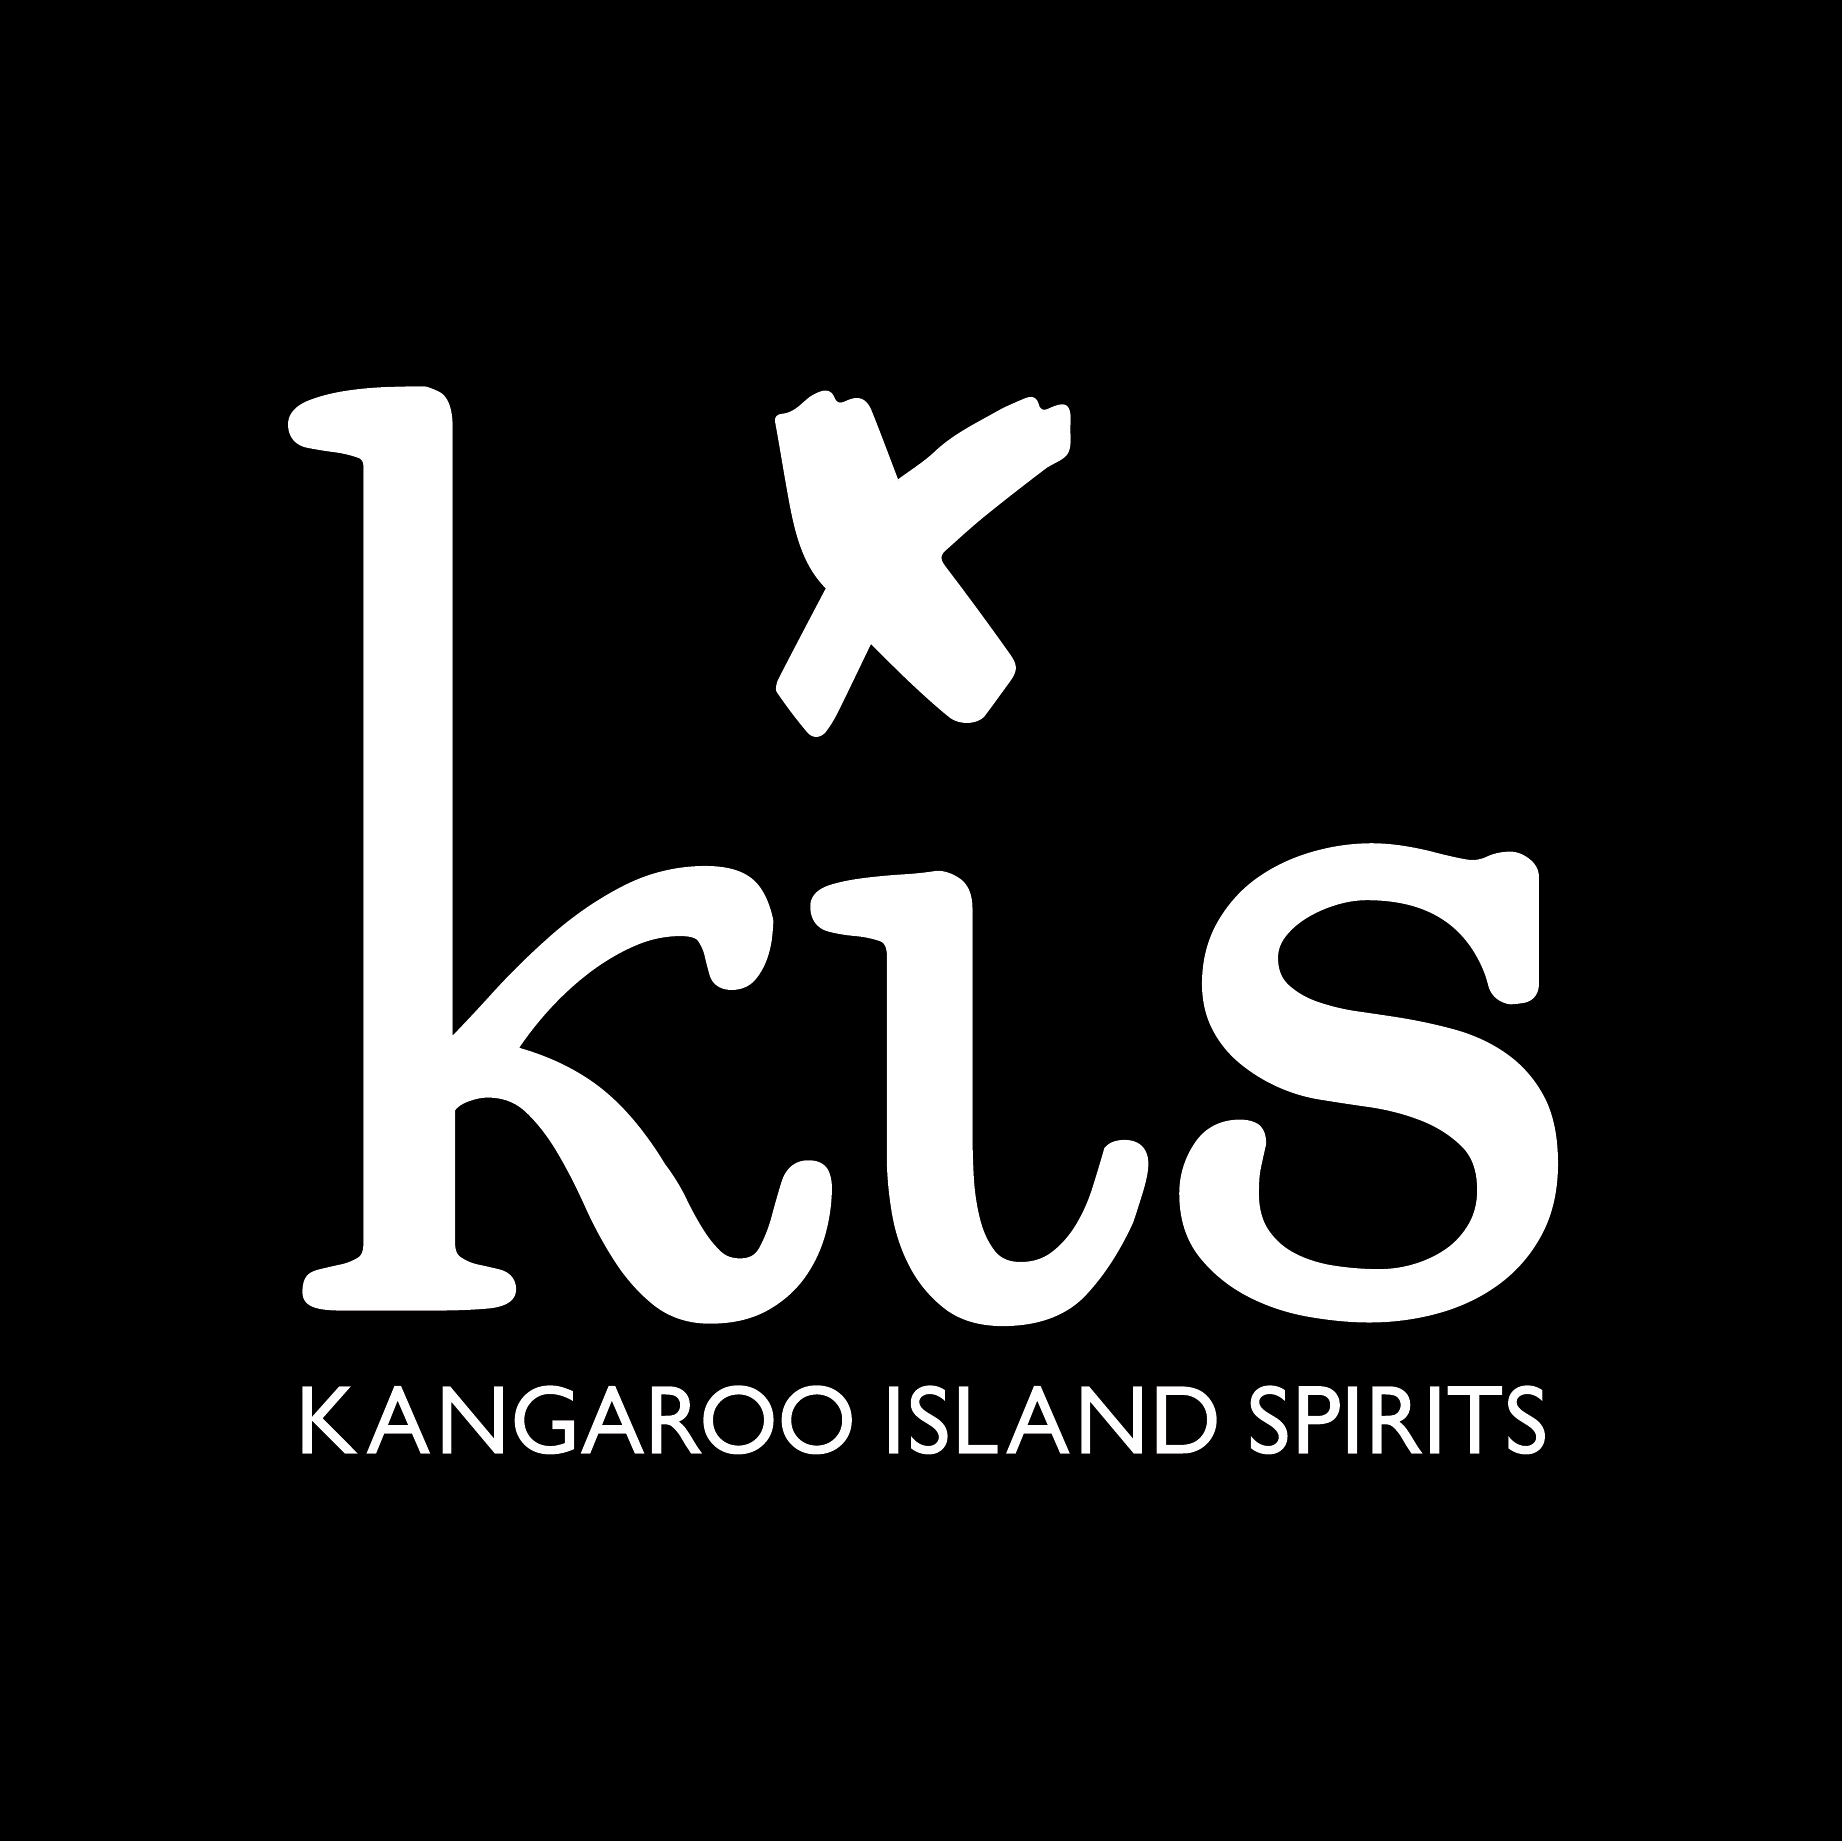 Kangaroo Island Spirits - Square Black KIS Logo